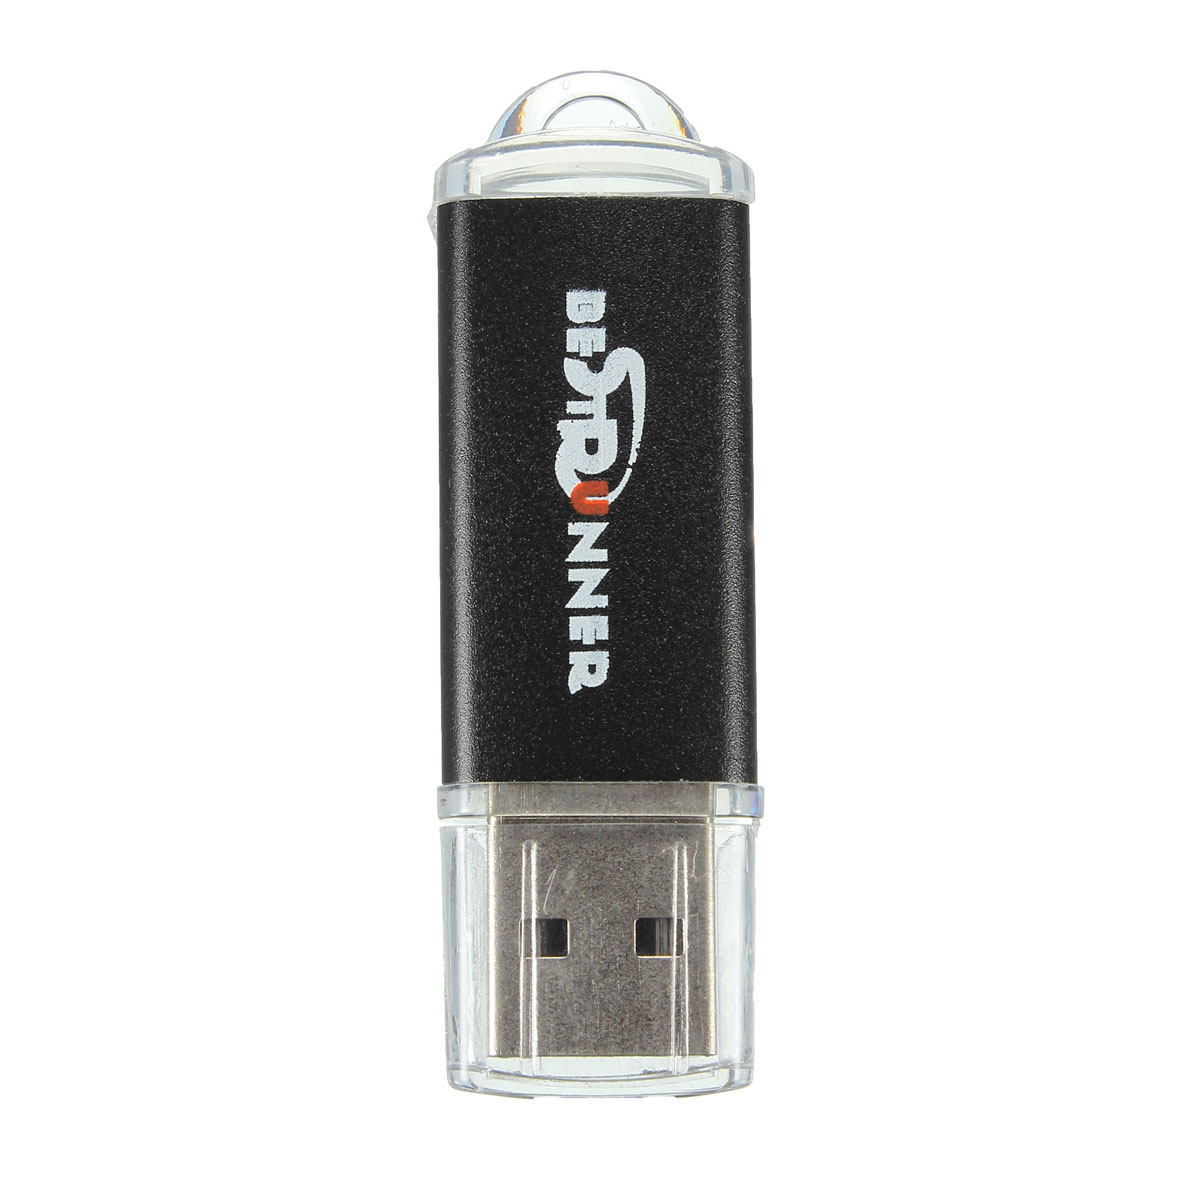 Bestrunner-Multi-Color-Portable-USB-20-1GB960M-Pendrive-USB-Disk-for-Macbook-Laptop-PC-1723018-6